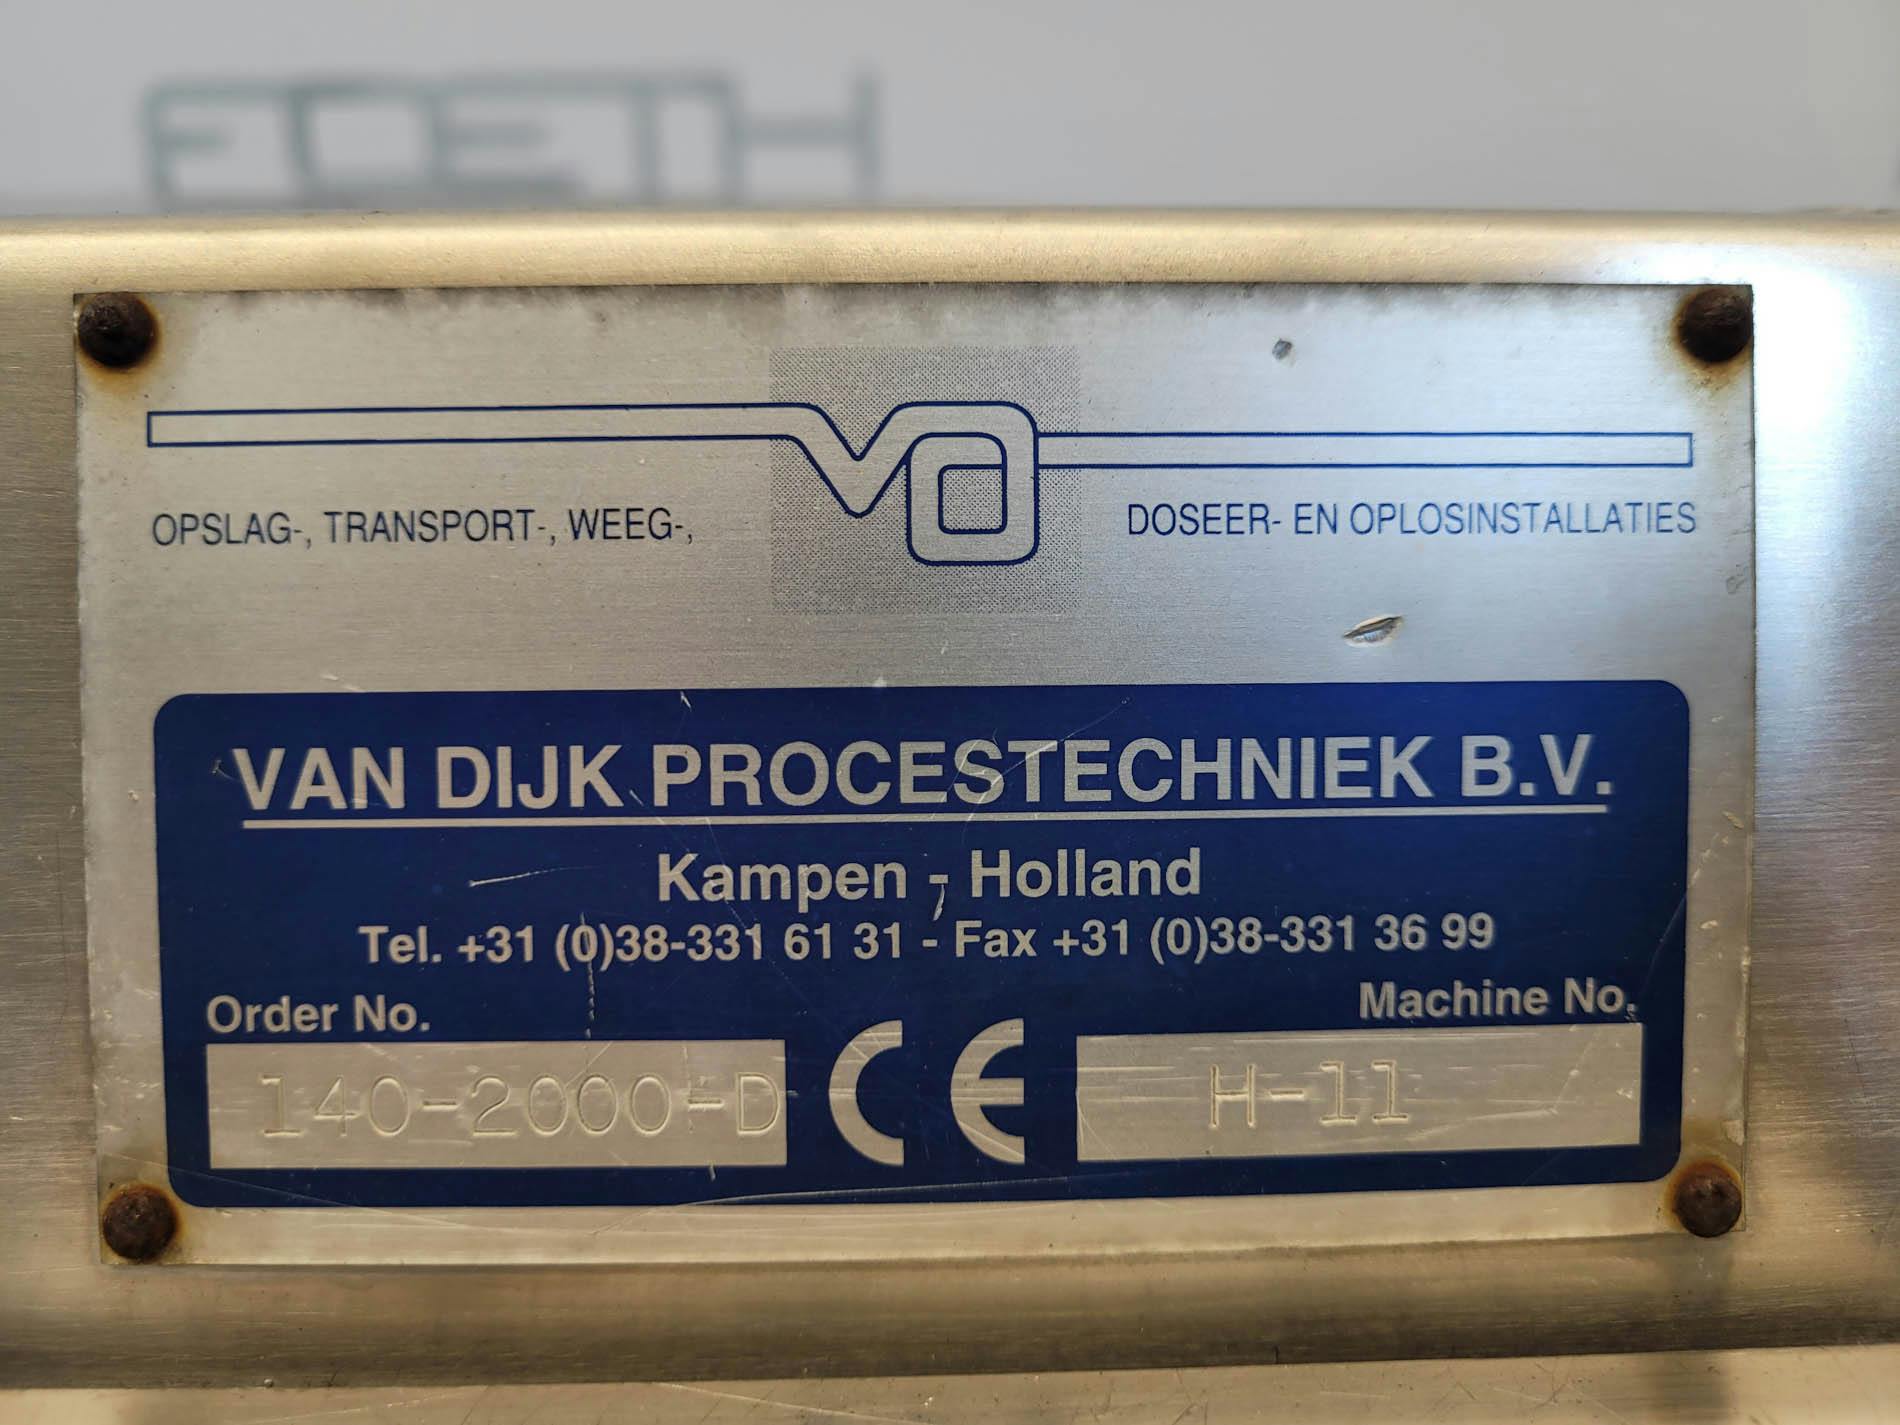 Van Dijk Procestechniek H-11 - Stacja rozladunku worków - image 14